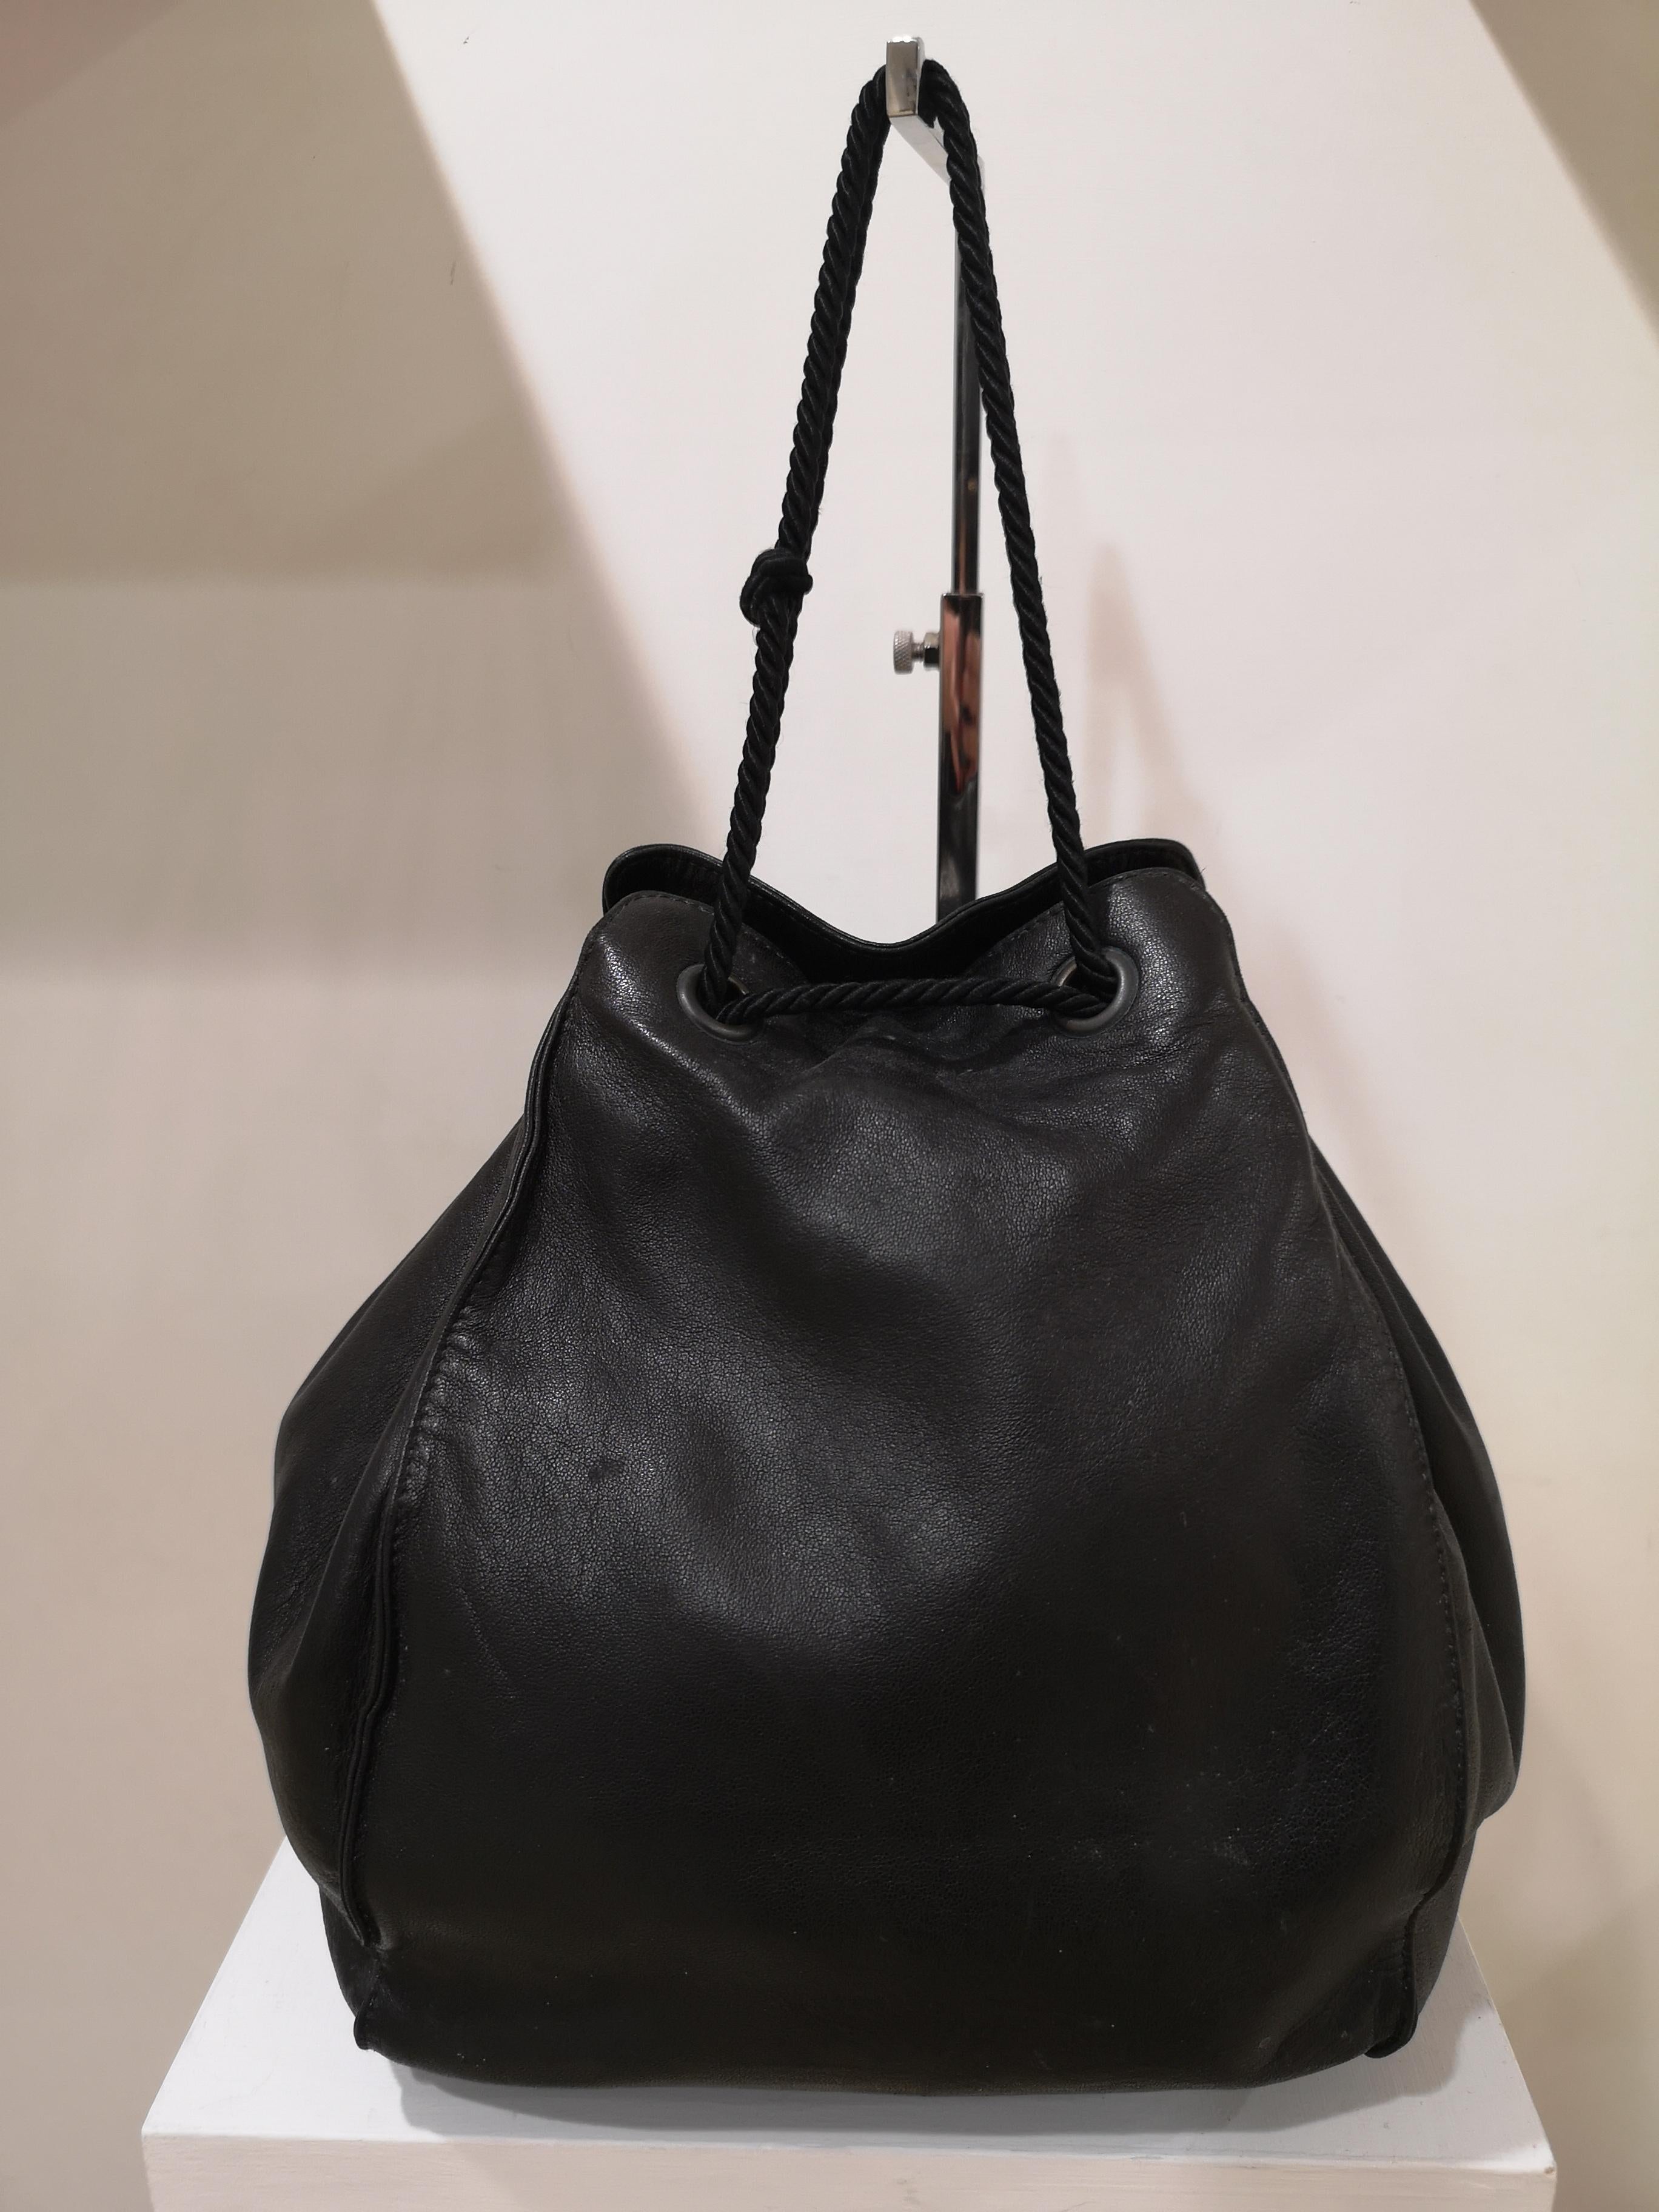 Black Prada black leather satchel